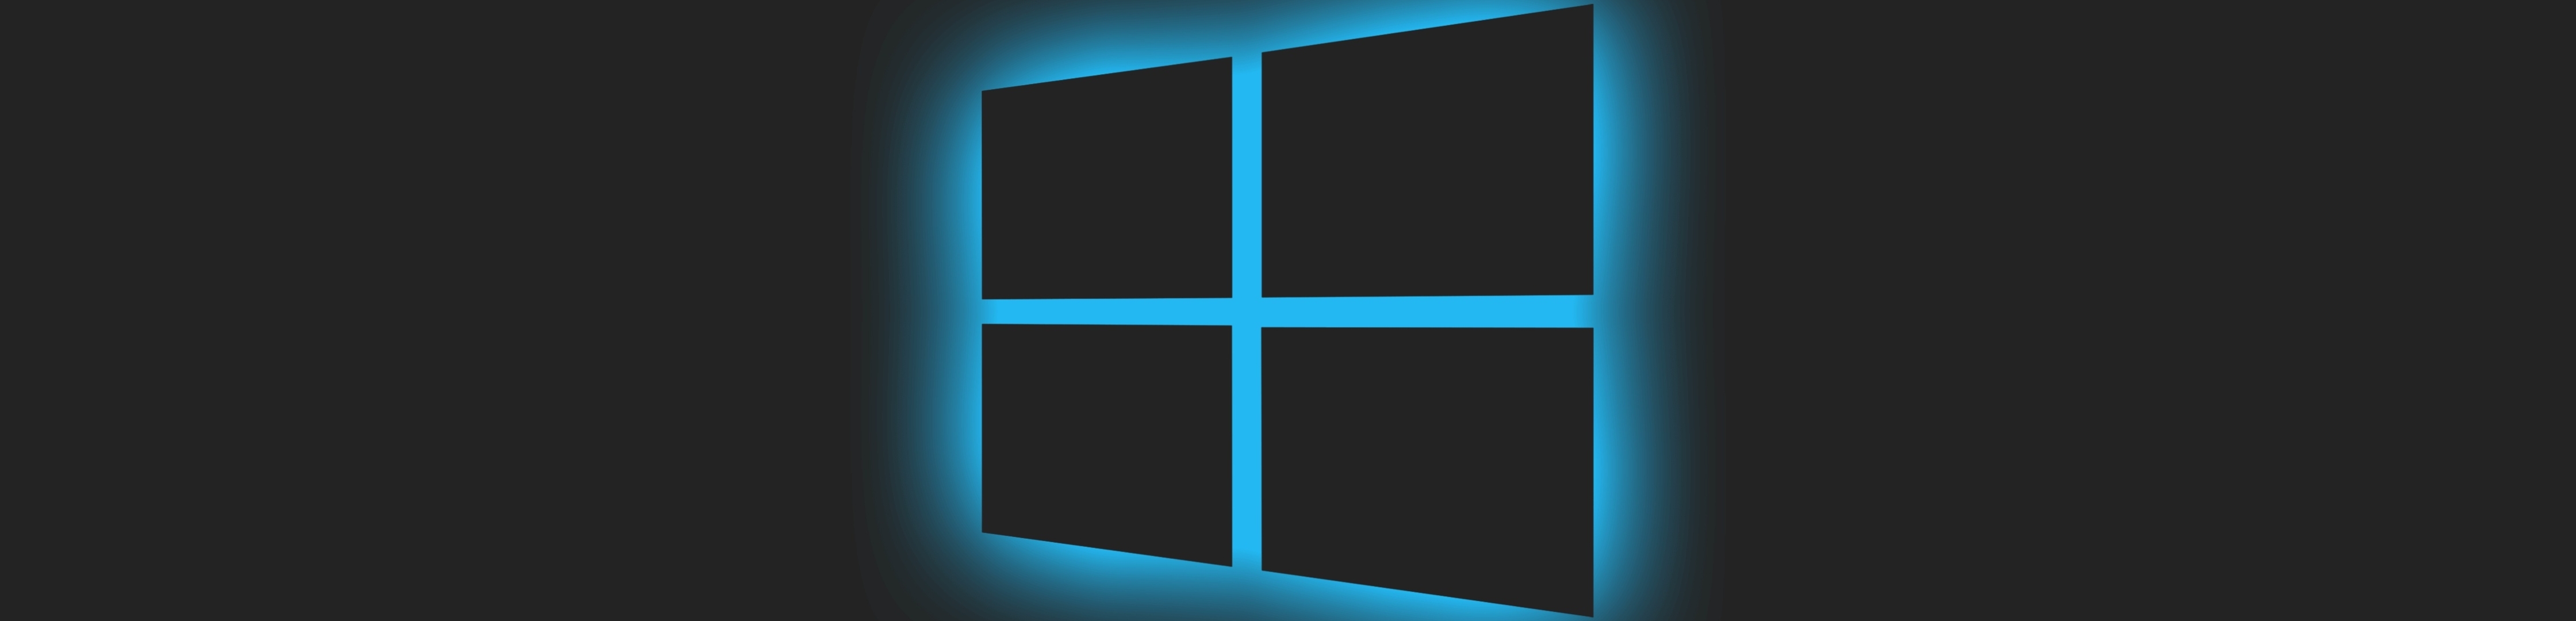 4480x1080 Resolution Windows 10 Logo Blue Glow 4480x1080 Resolution